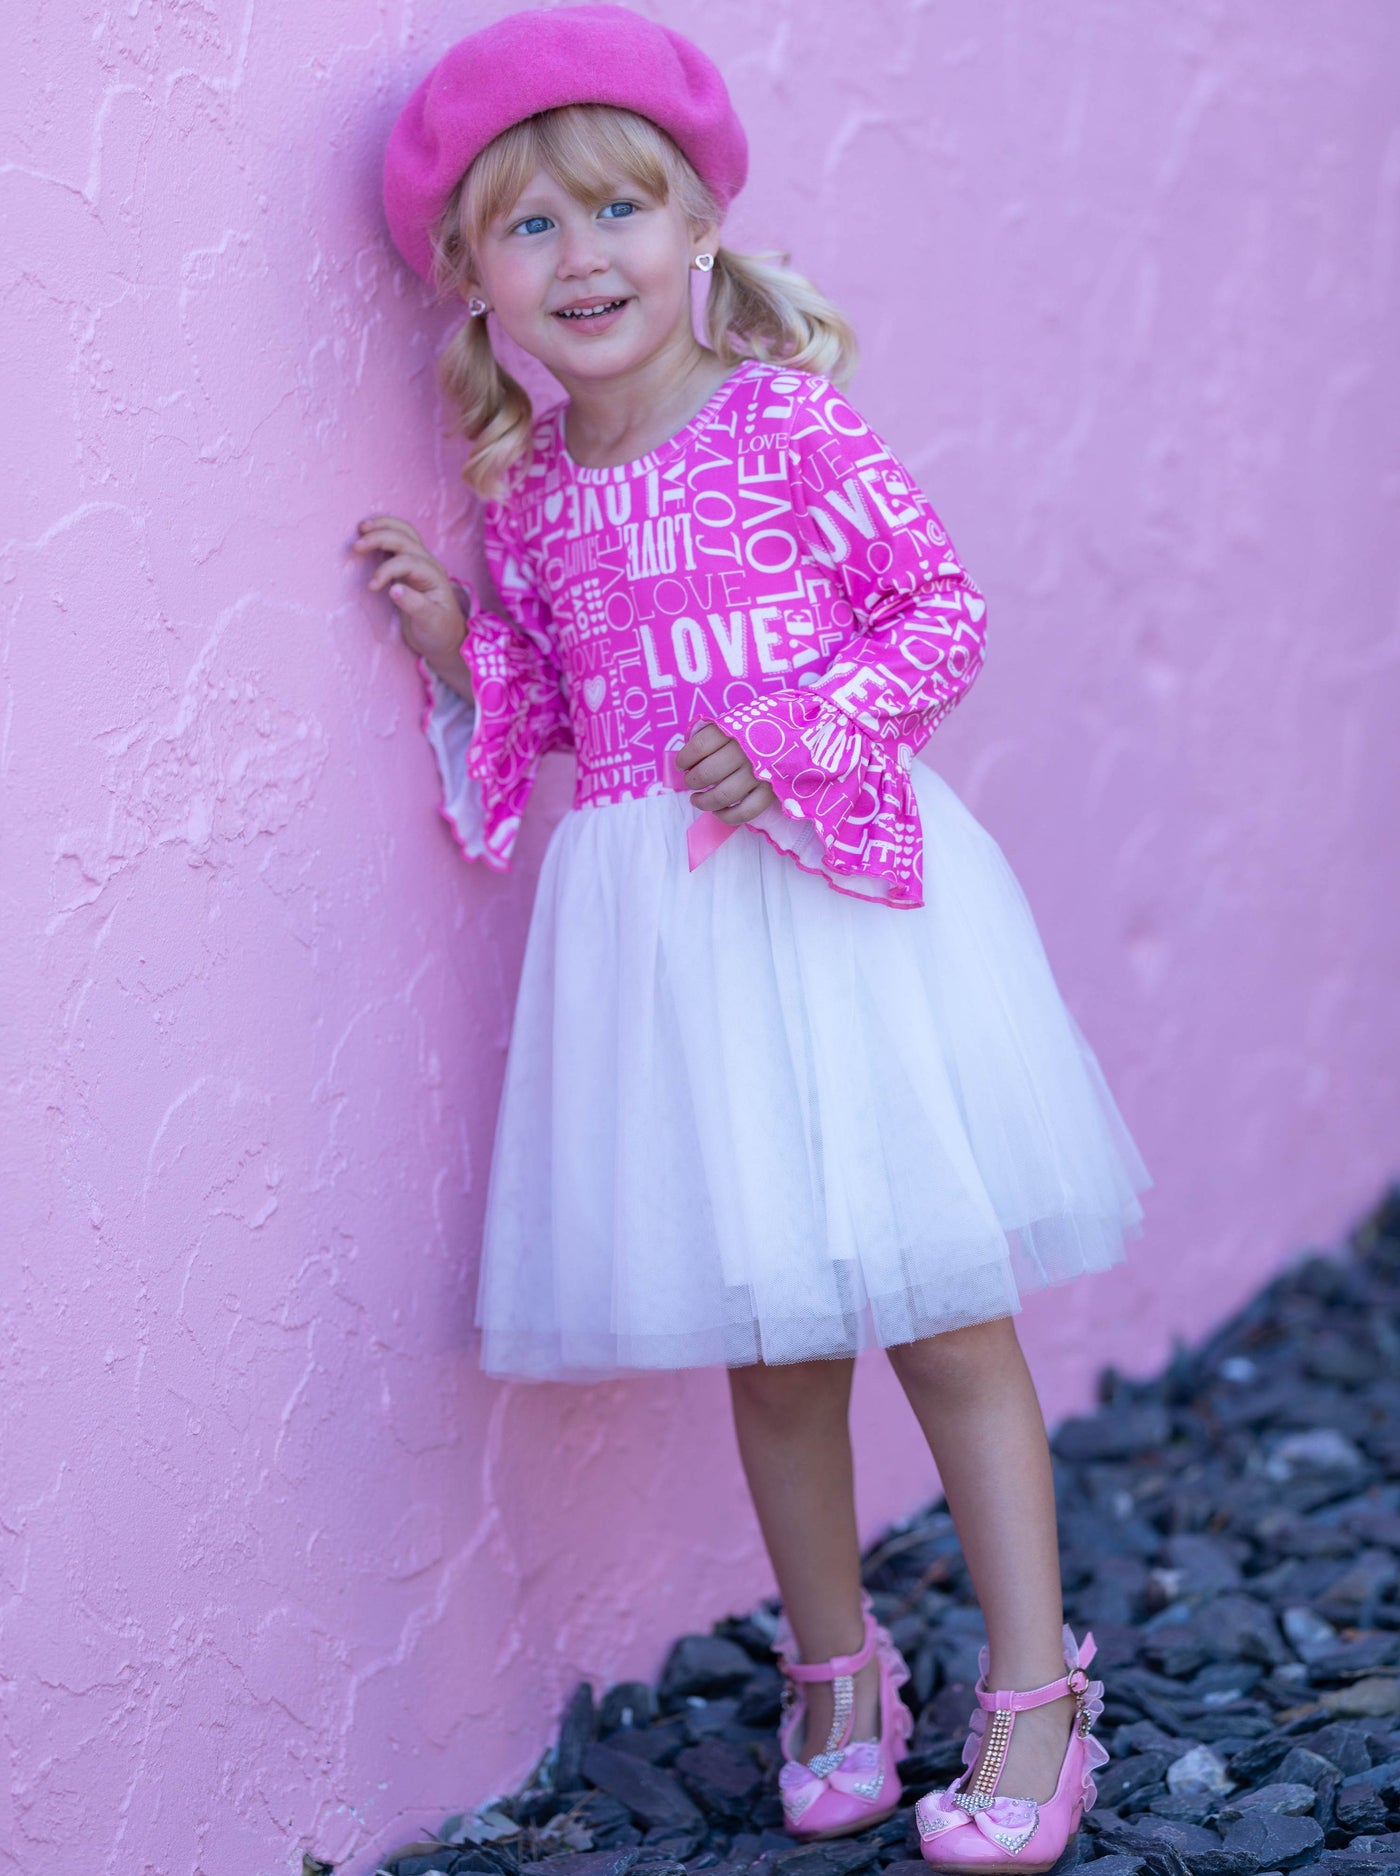 Fancy Toddler Clothes | Girls Love Print Tutu Dress | Girls Boutique